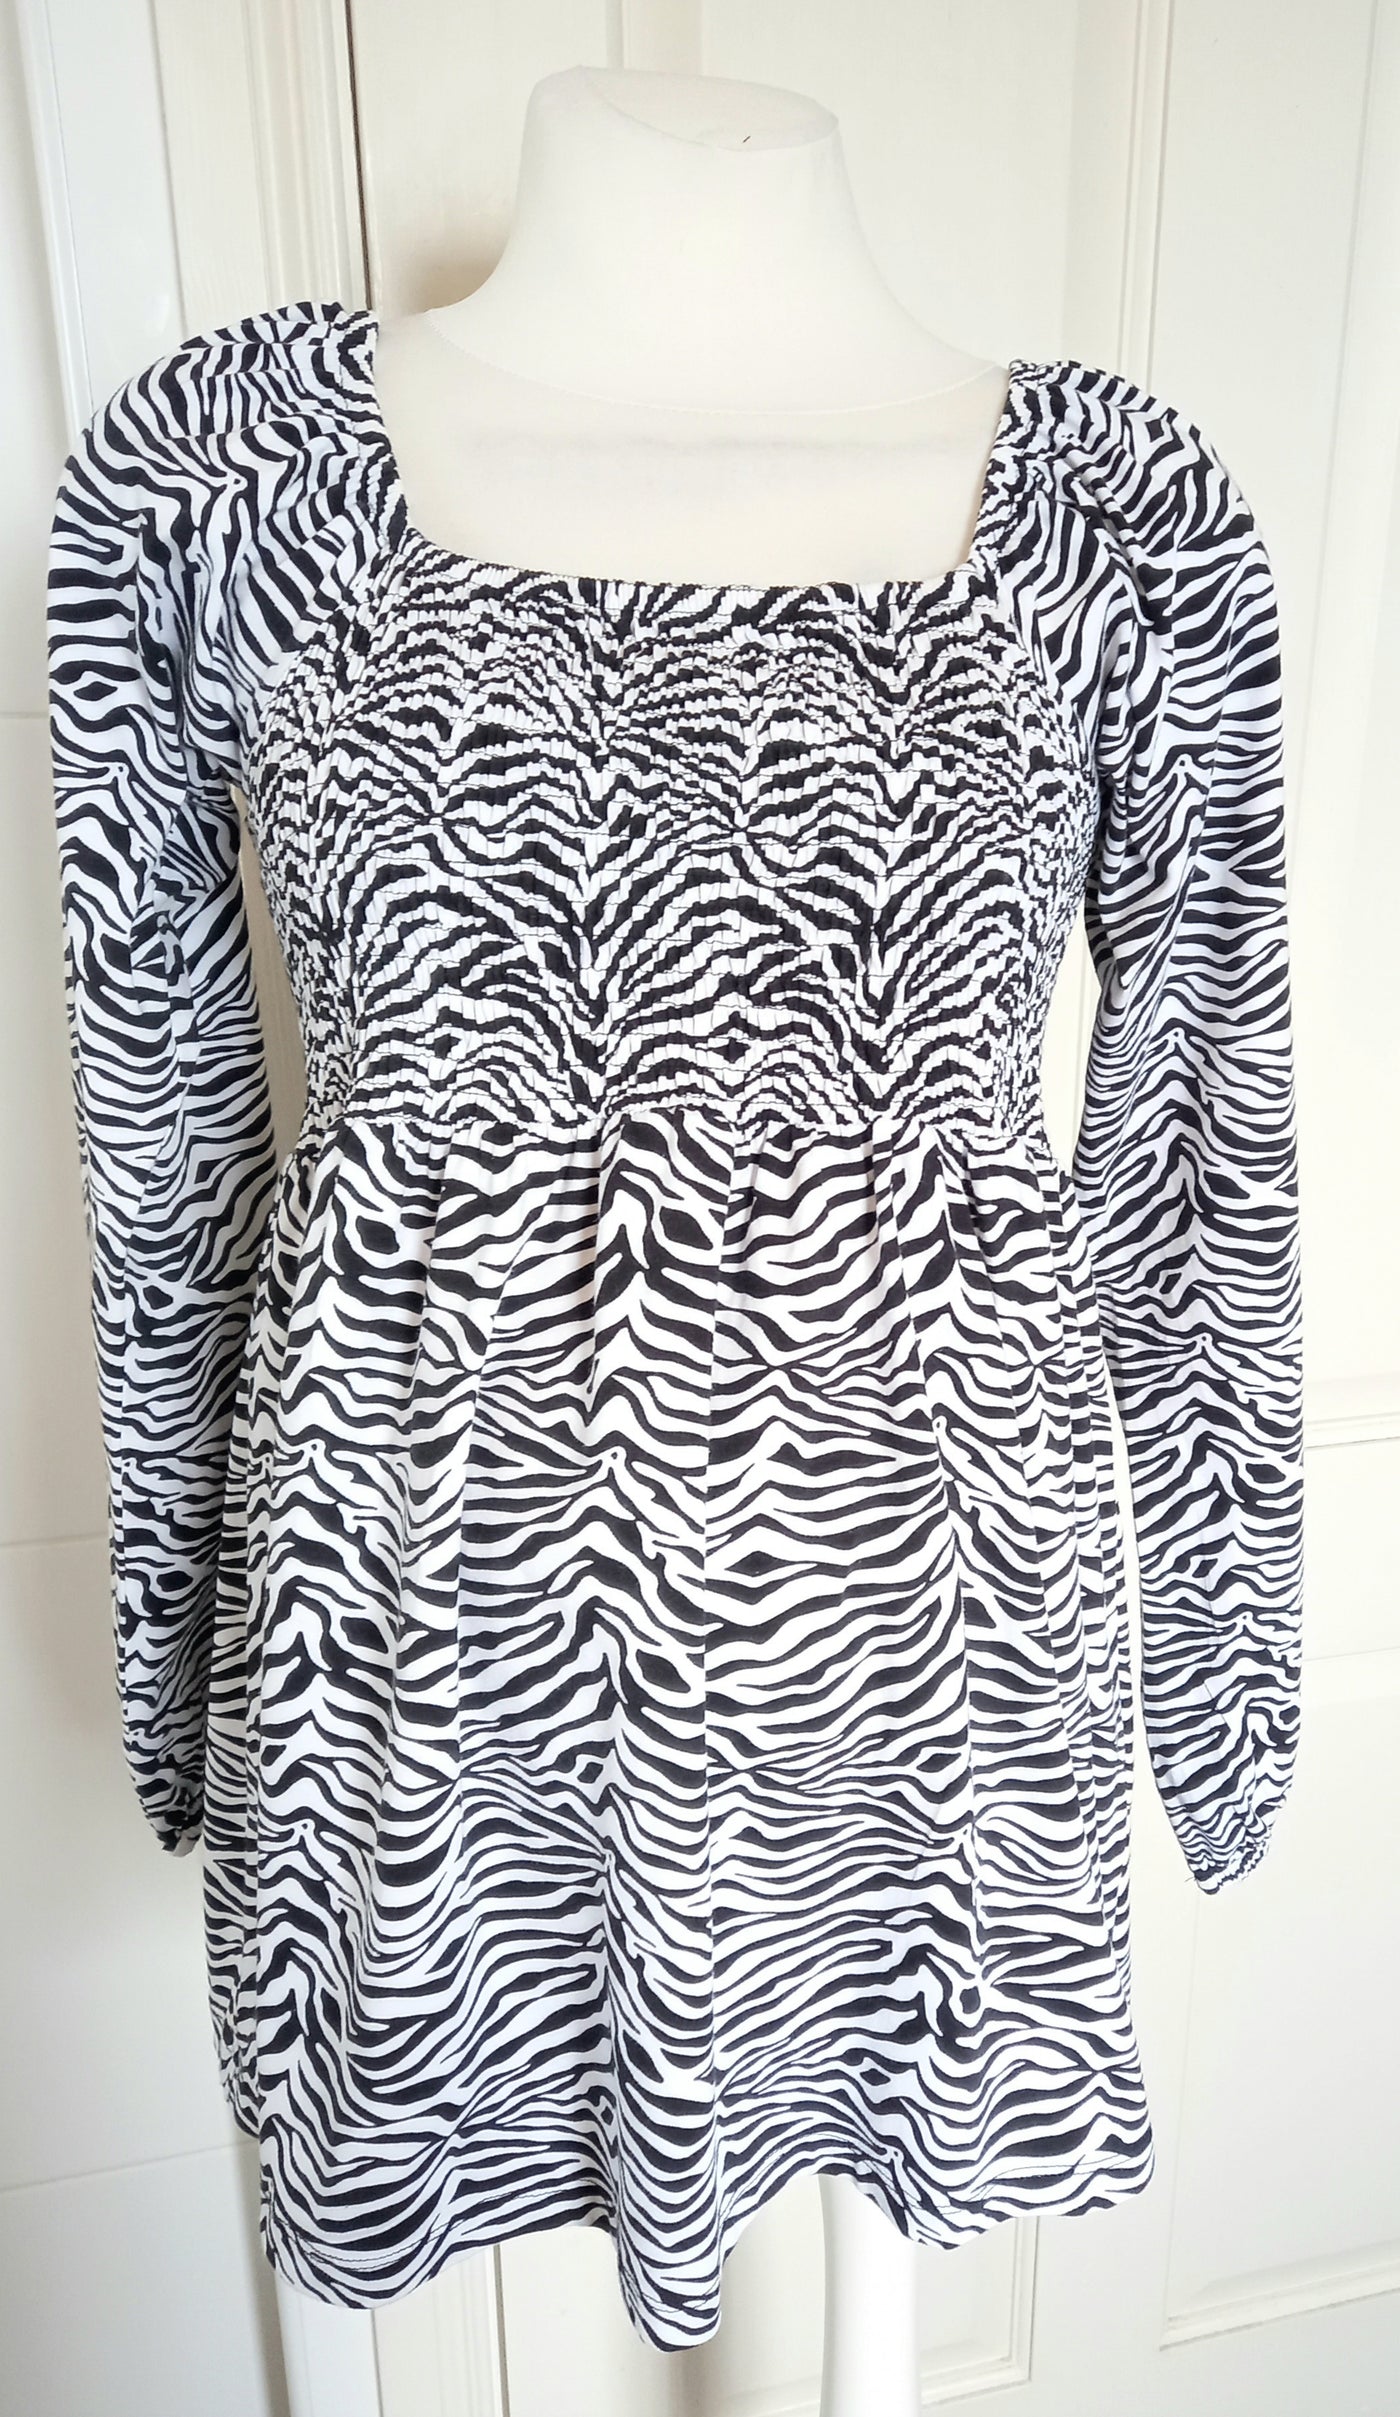 Next Maternity Black & White Zebra Print Top - Size 10